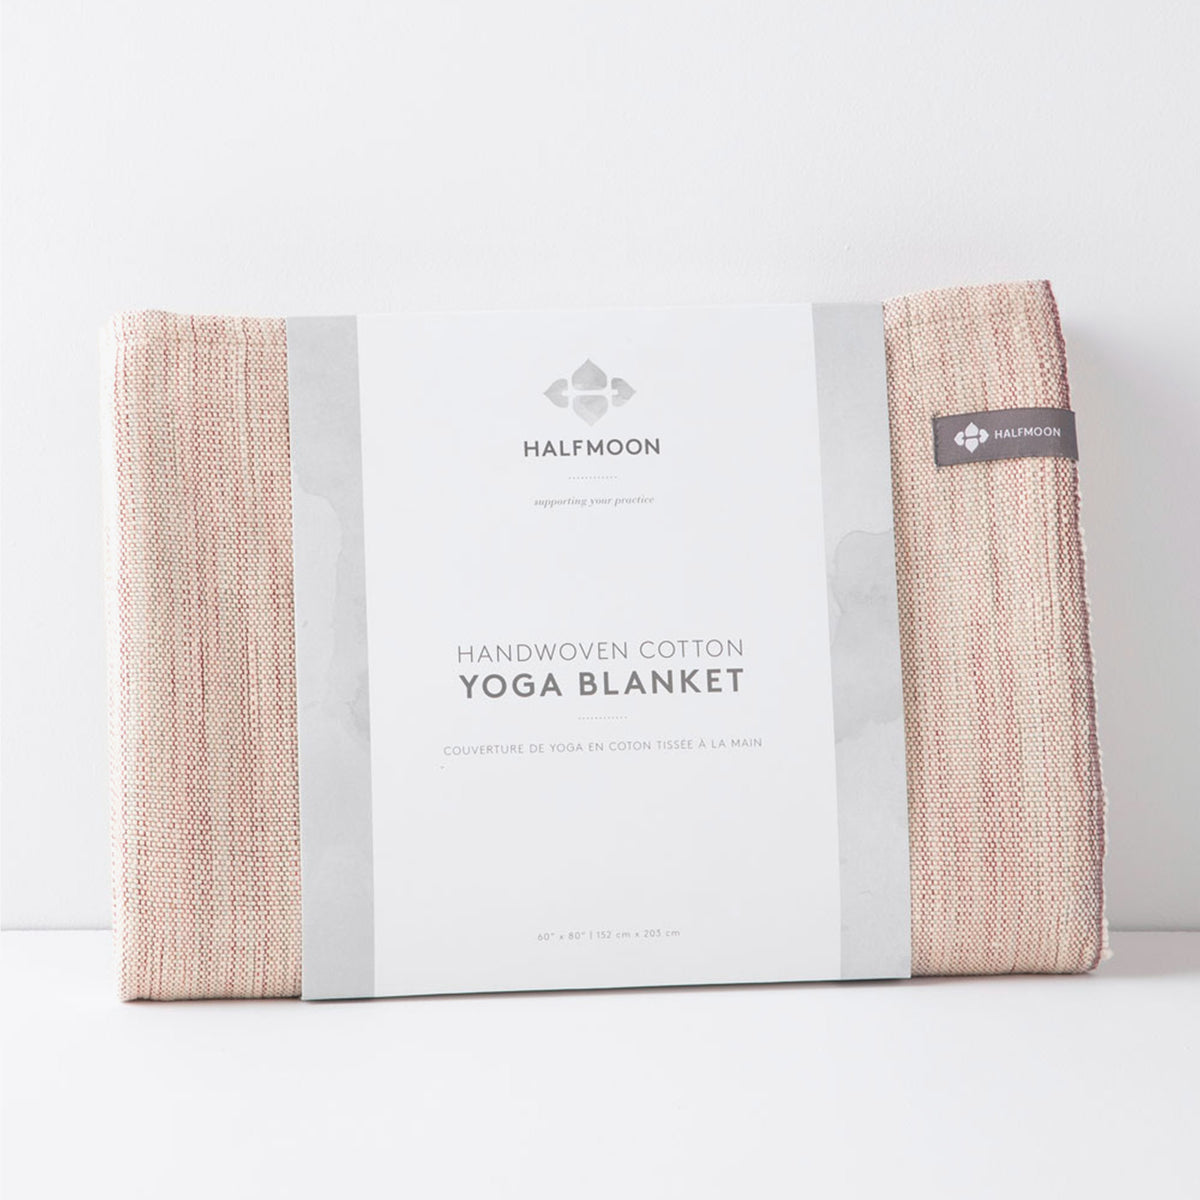 Halfmoon Melange Cotton Yoga Blanket Desert Rose in packaging